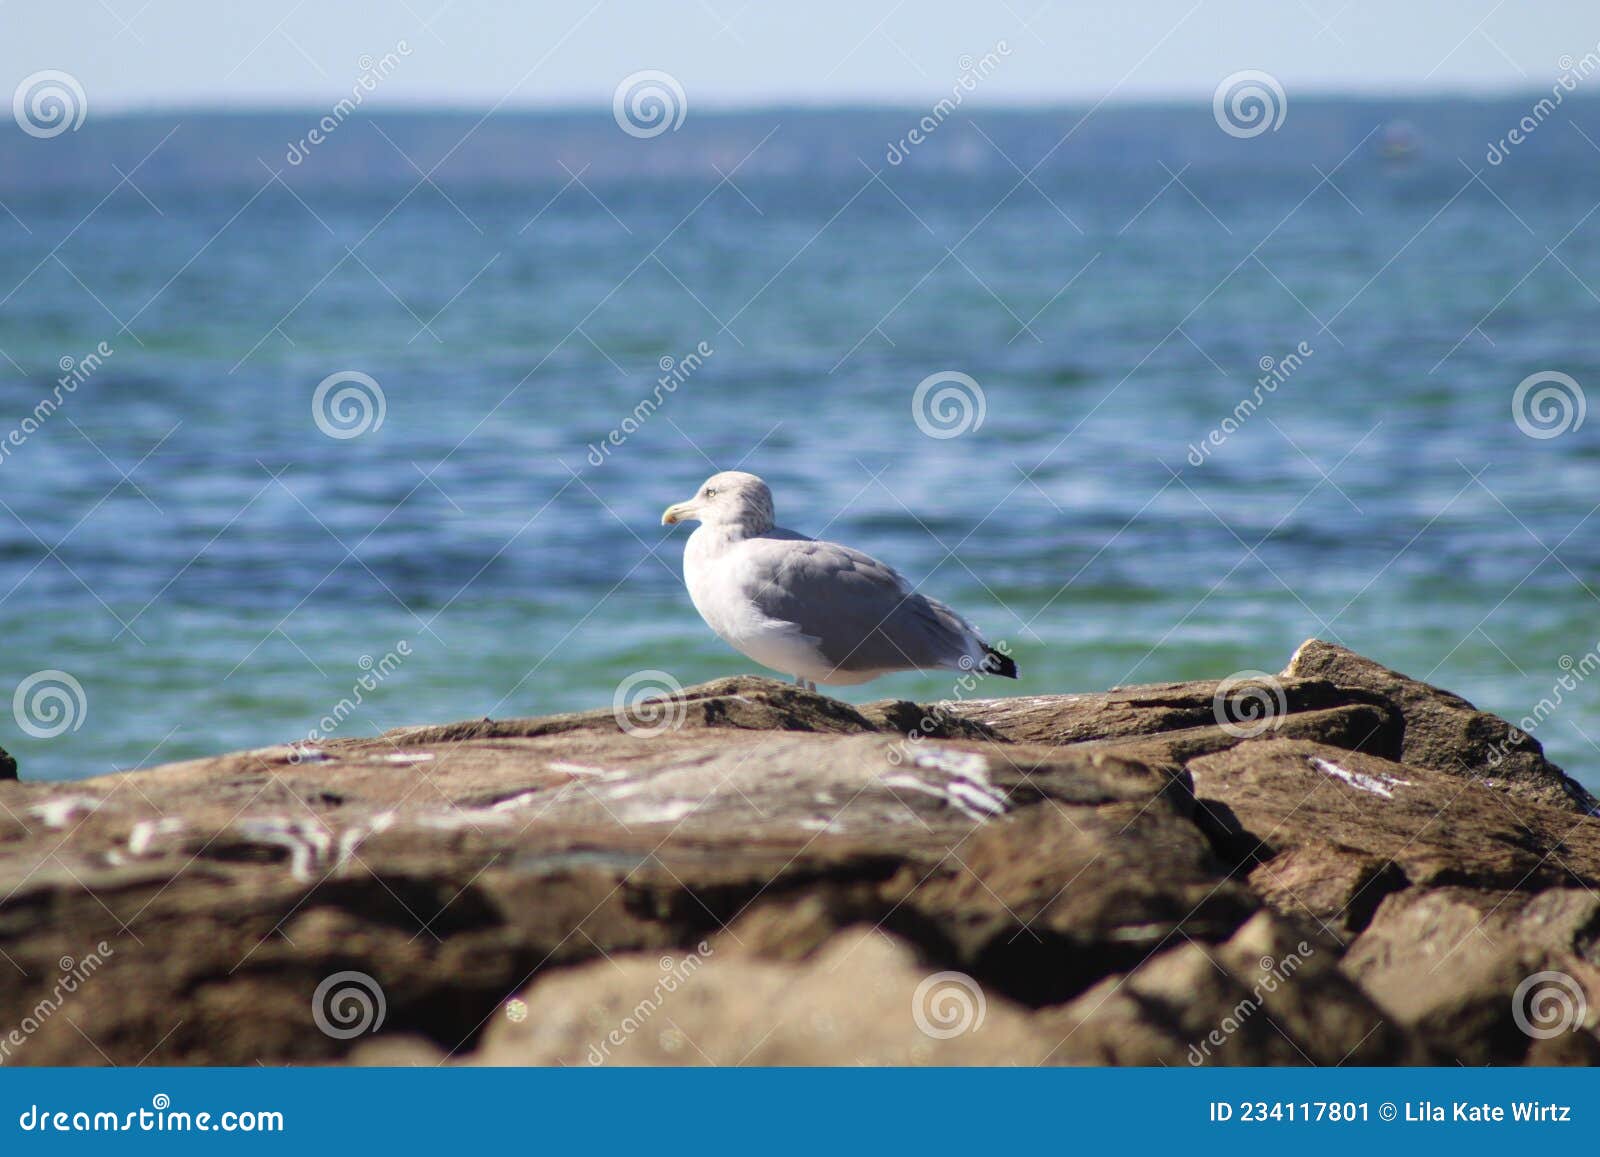 southgate birder, falmouth beach,